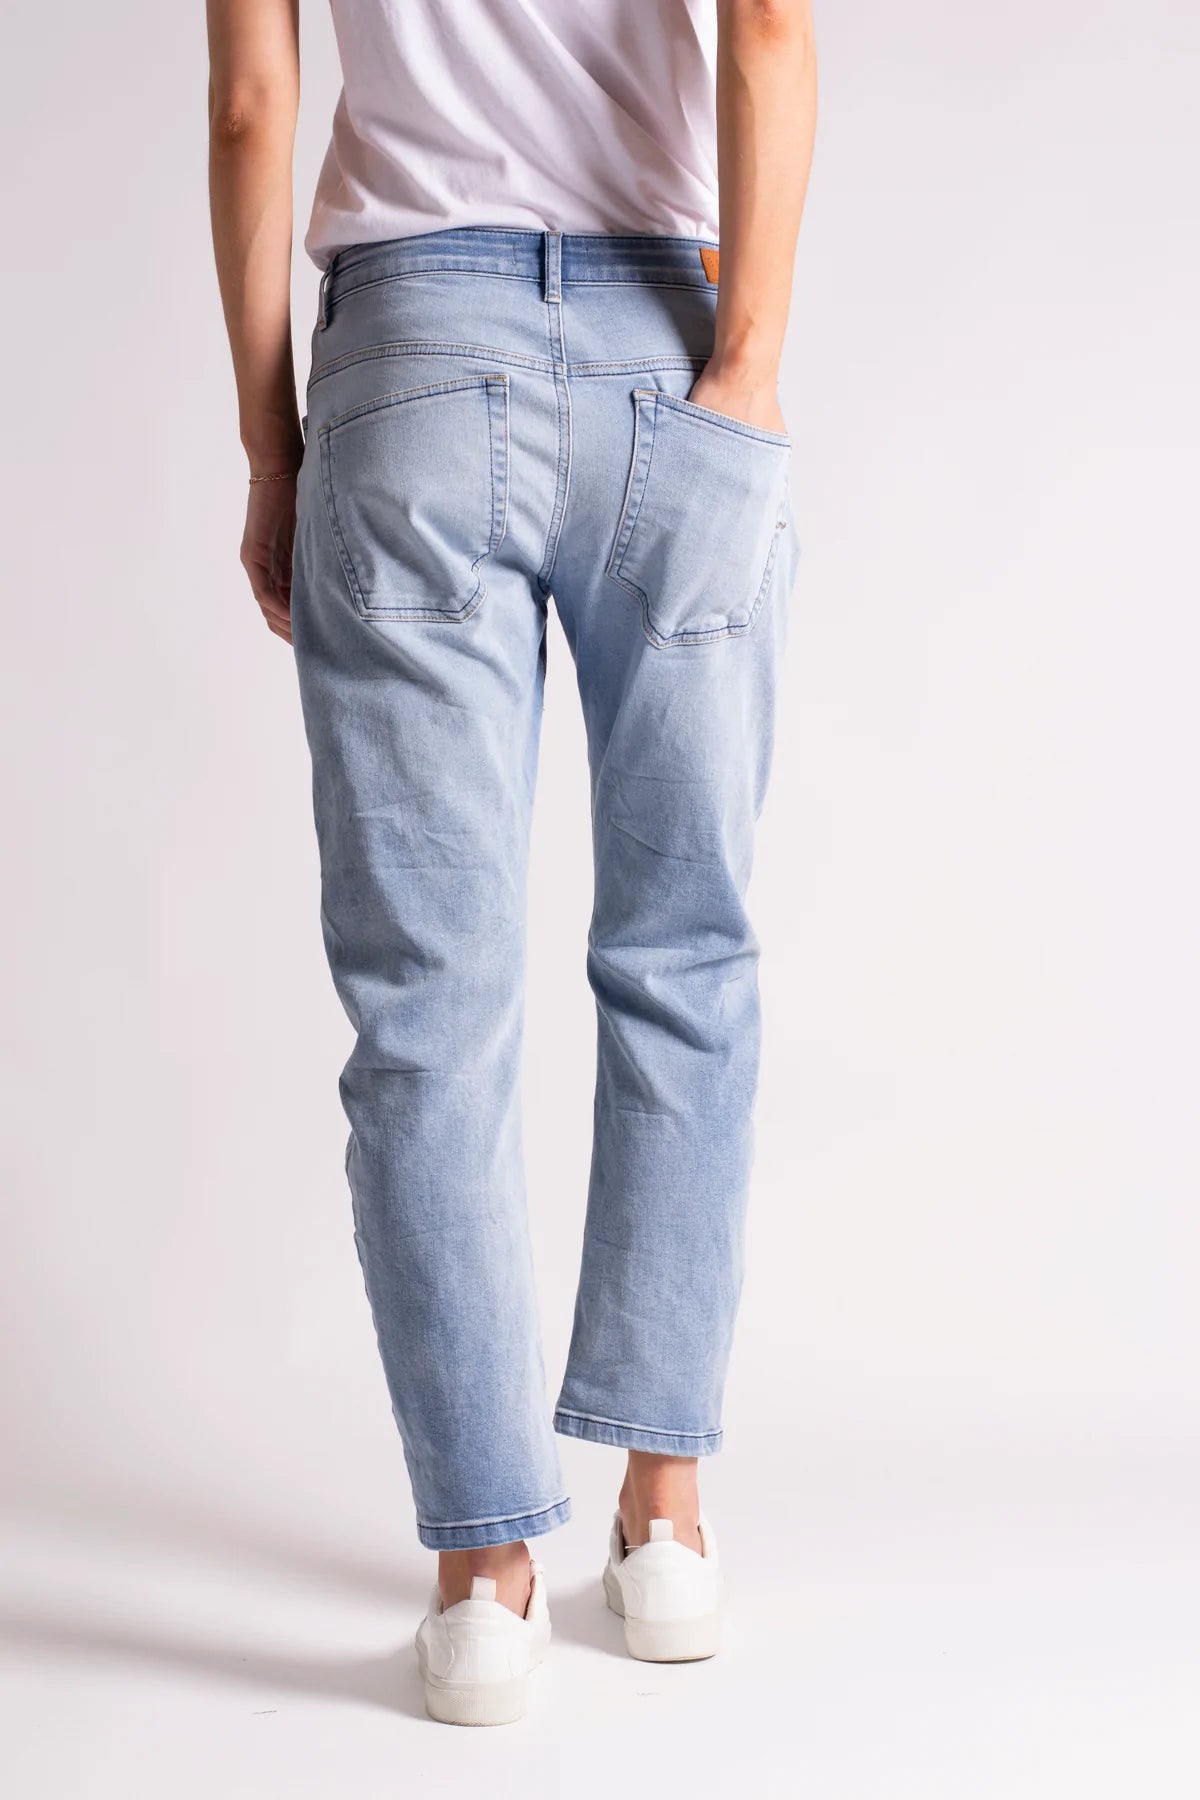 Sunshine Light Blue Jean - Bianco Jeans - Beechworth Emporium